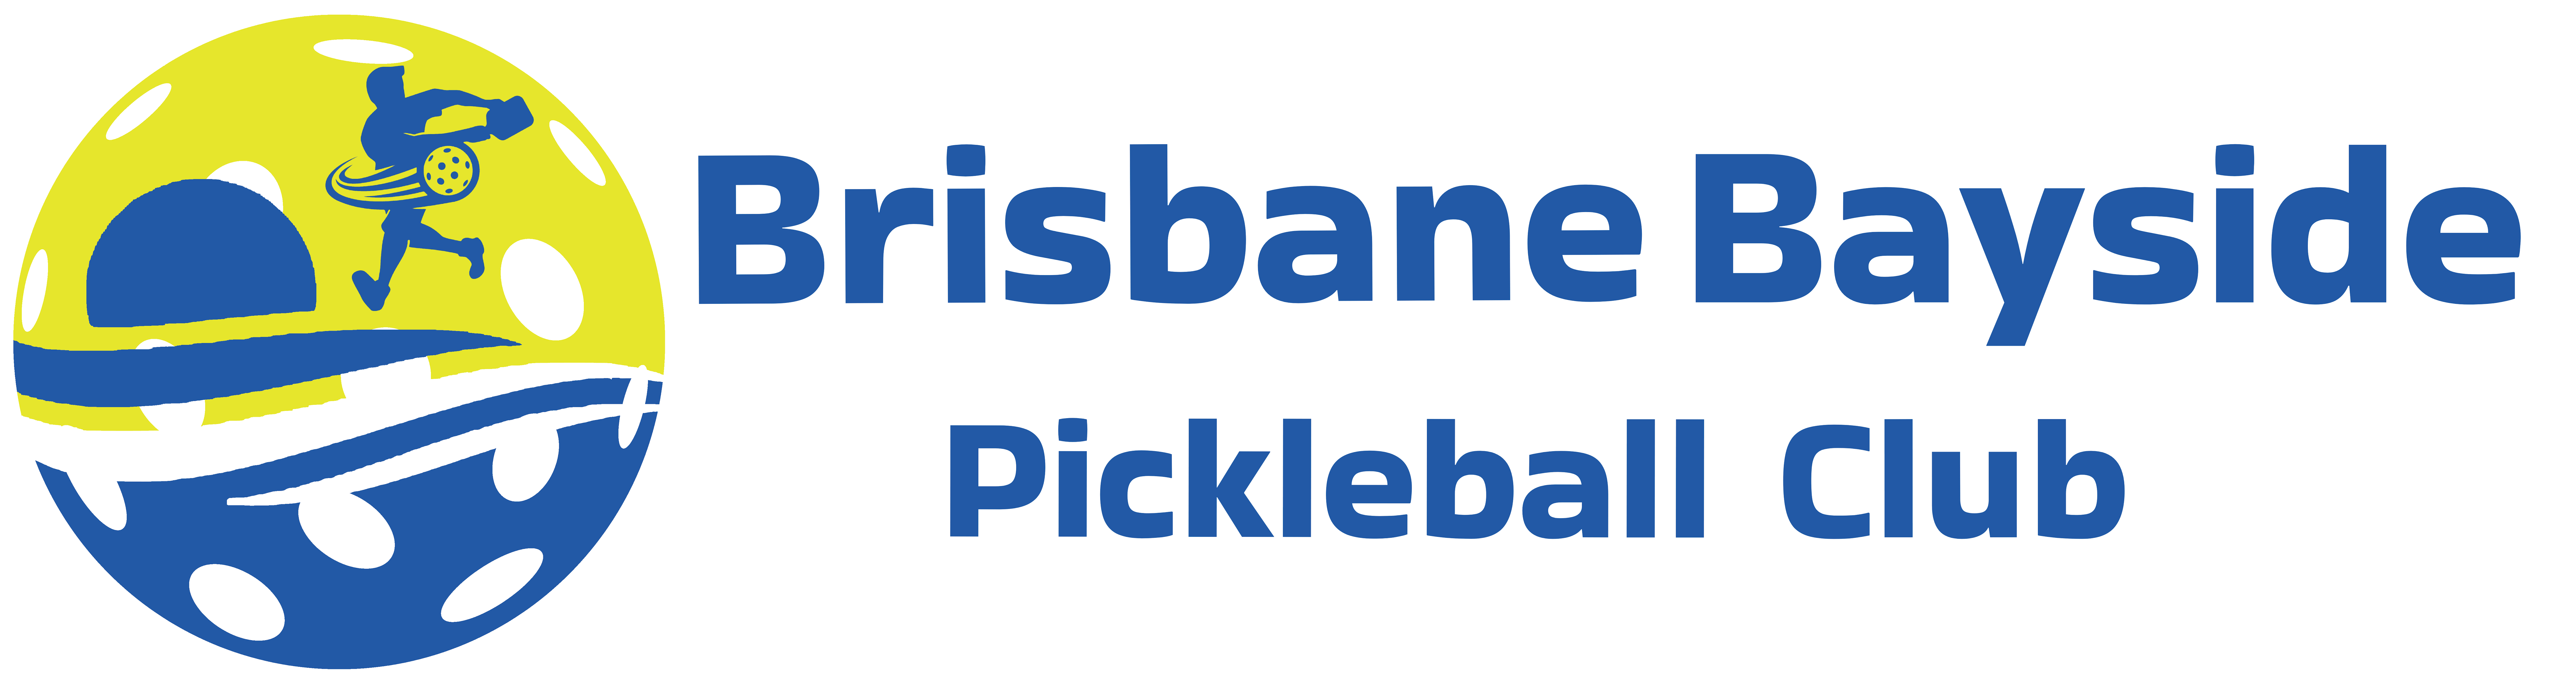 Brisbane Bayside Pickleball Club